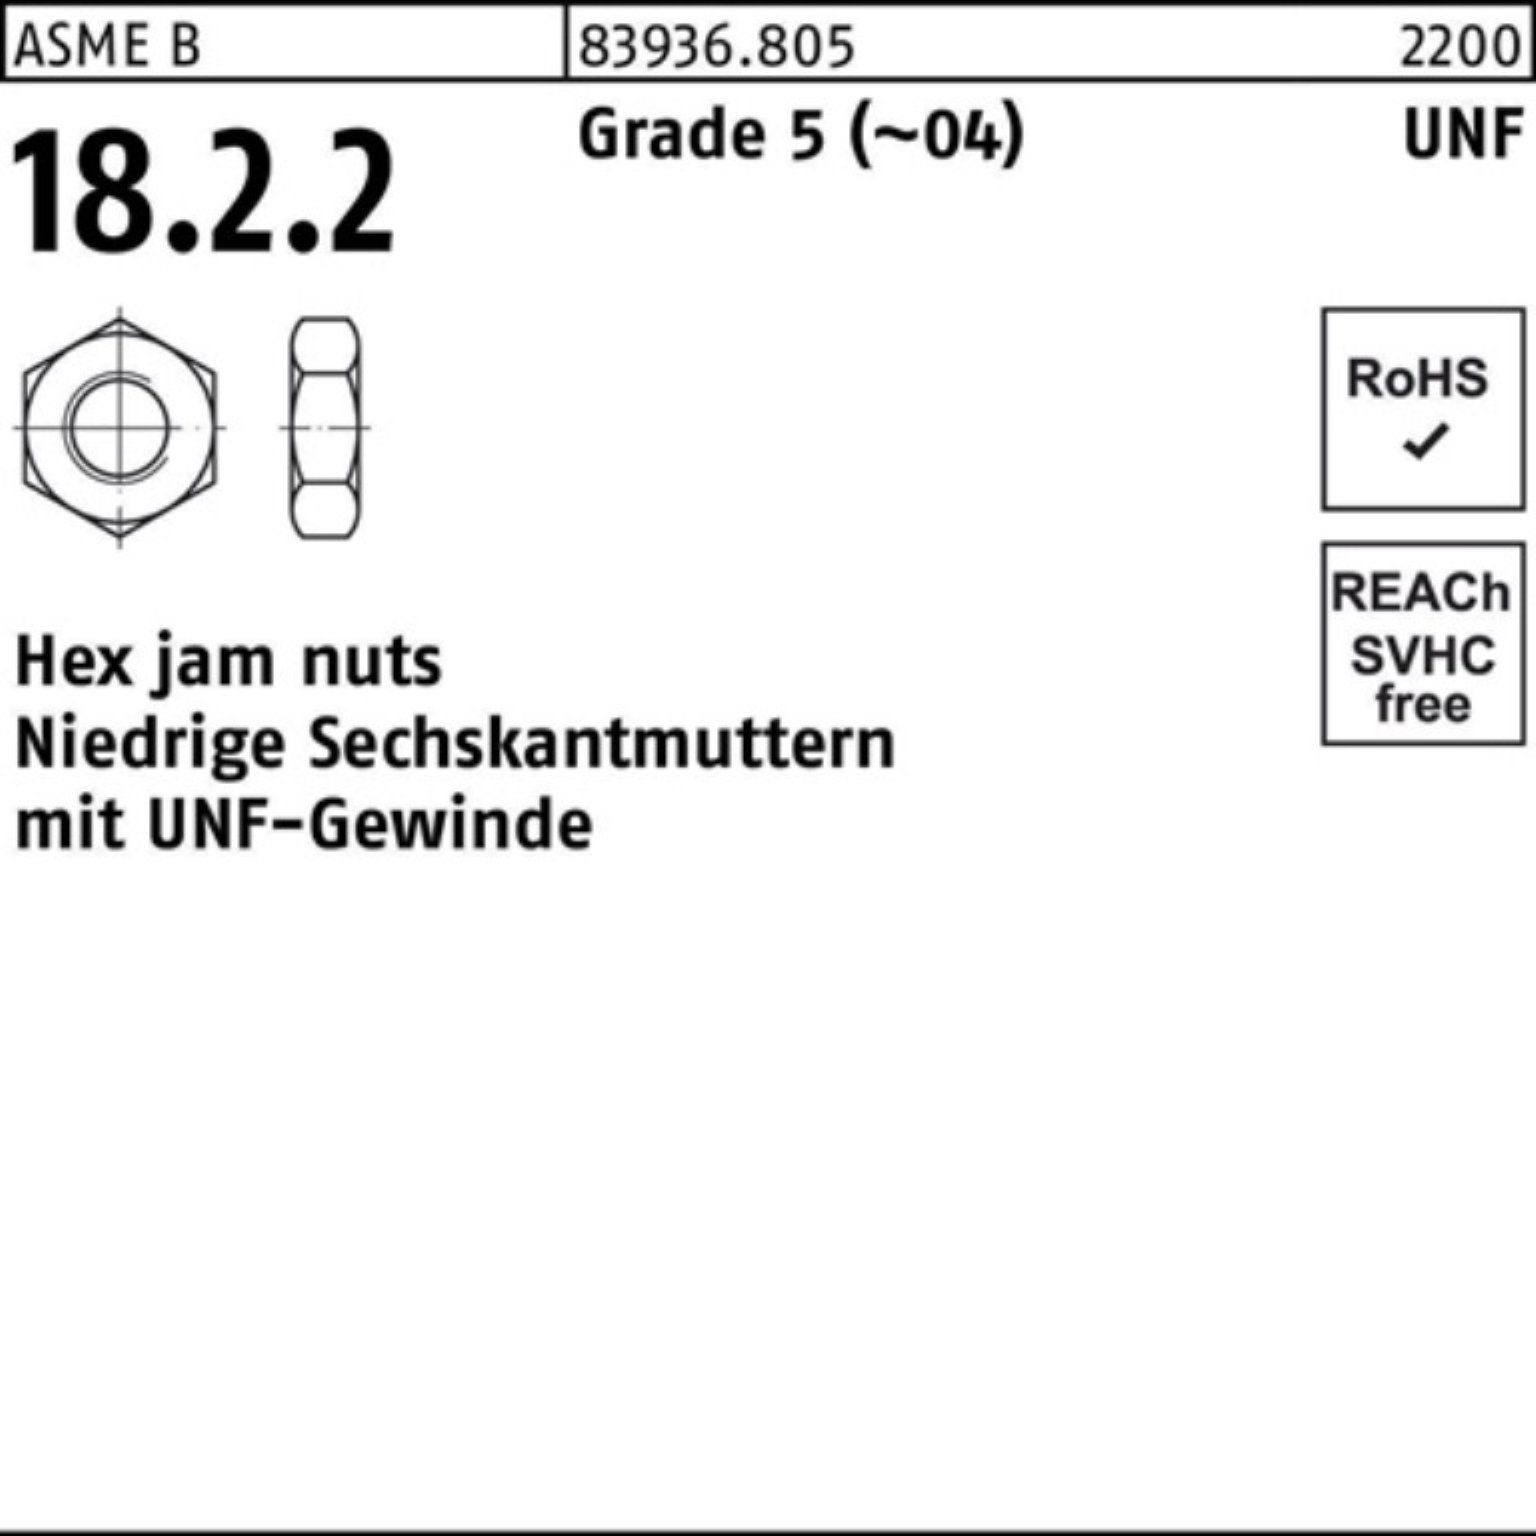 Reyher Muttern 100er niedrig R UNF-Gewinde Sechskantmutter 5 Grade Pack 5/16 83936